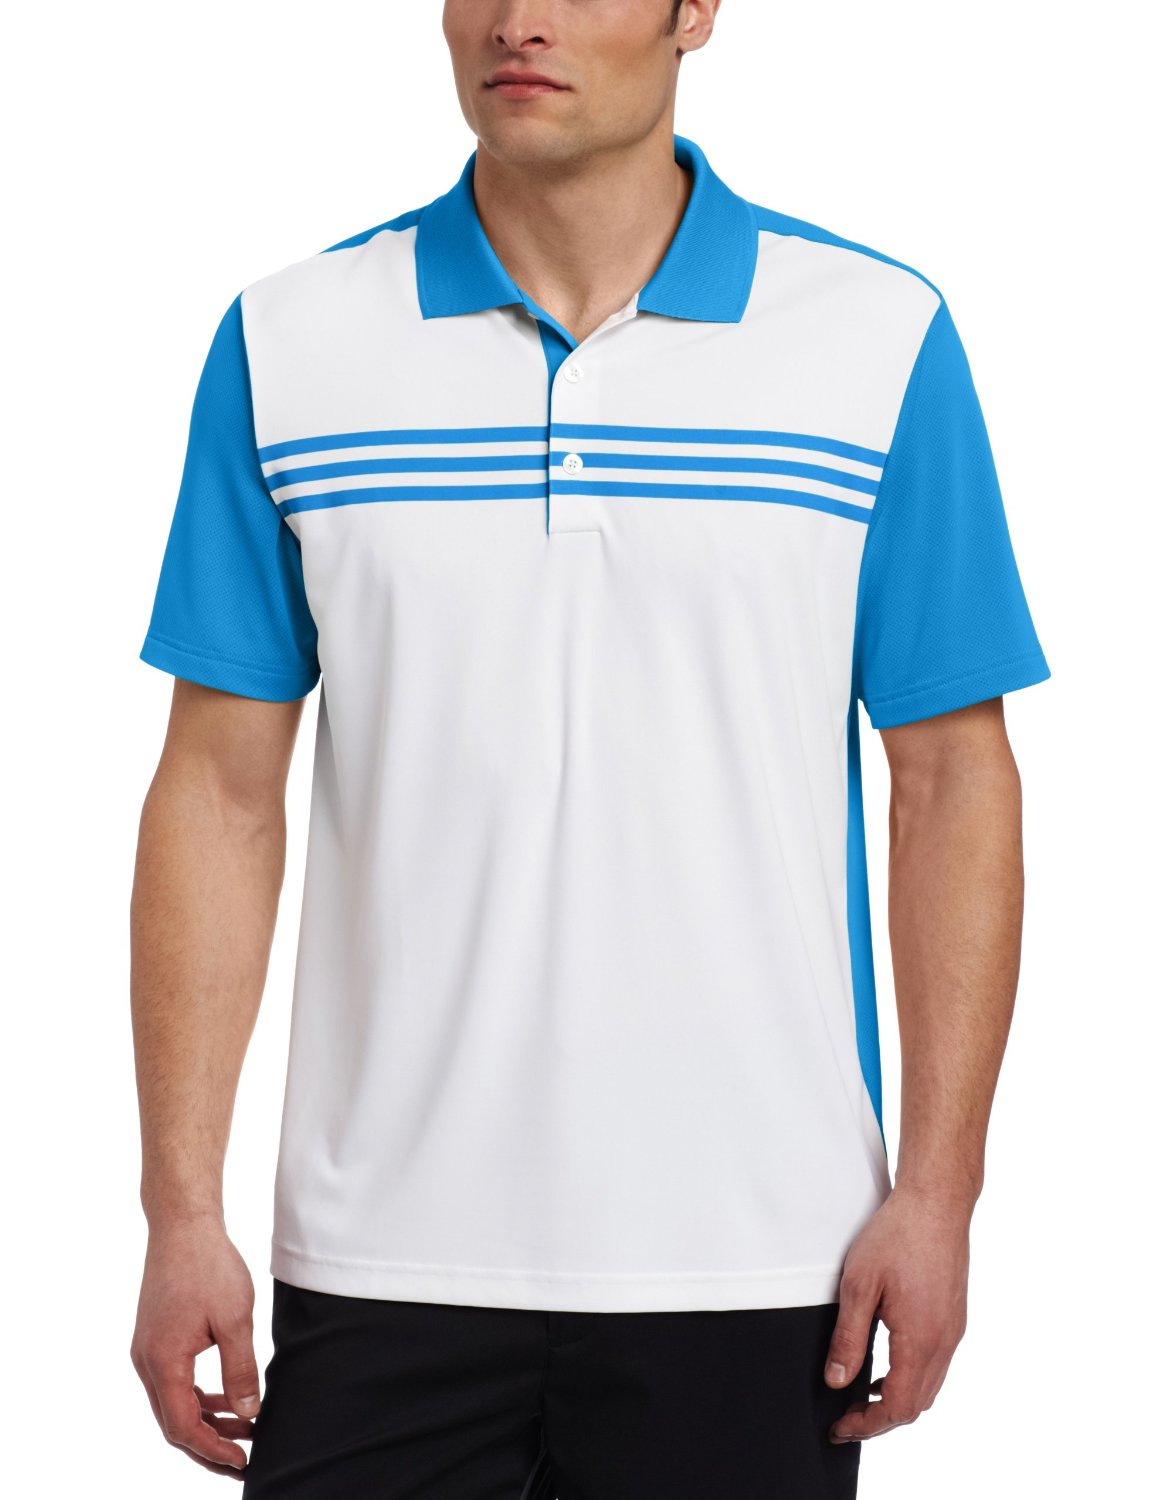 Adidas Mens Climacool 3 Stripes Color Block Golf Shirts